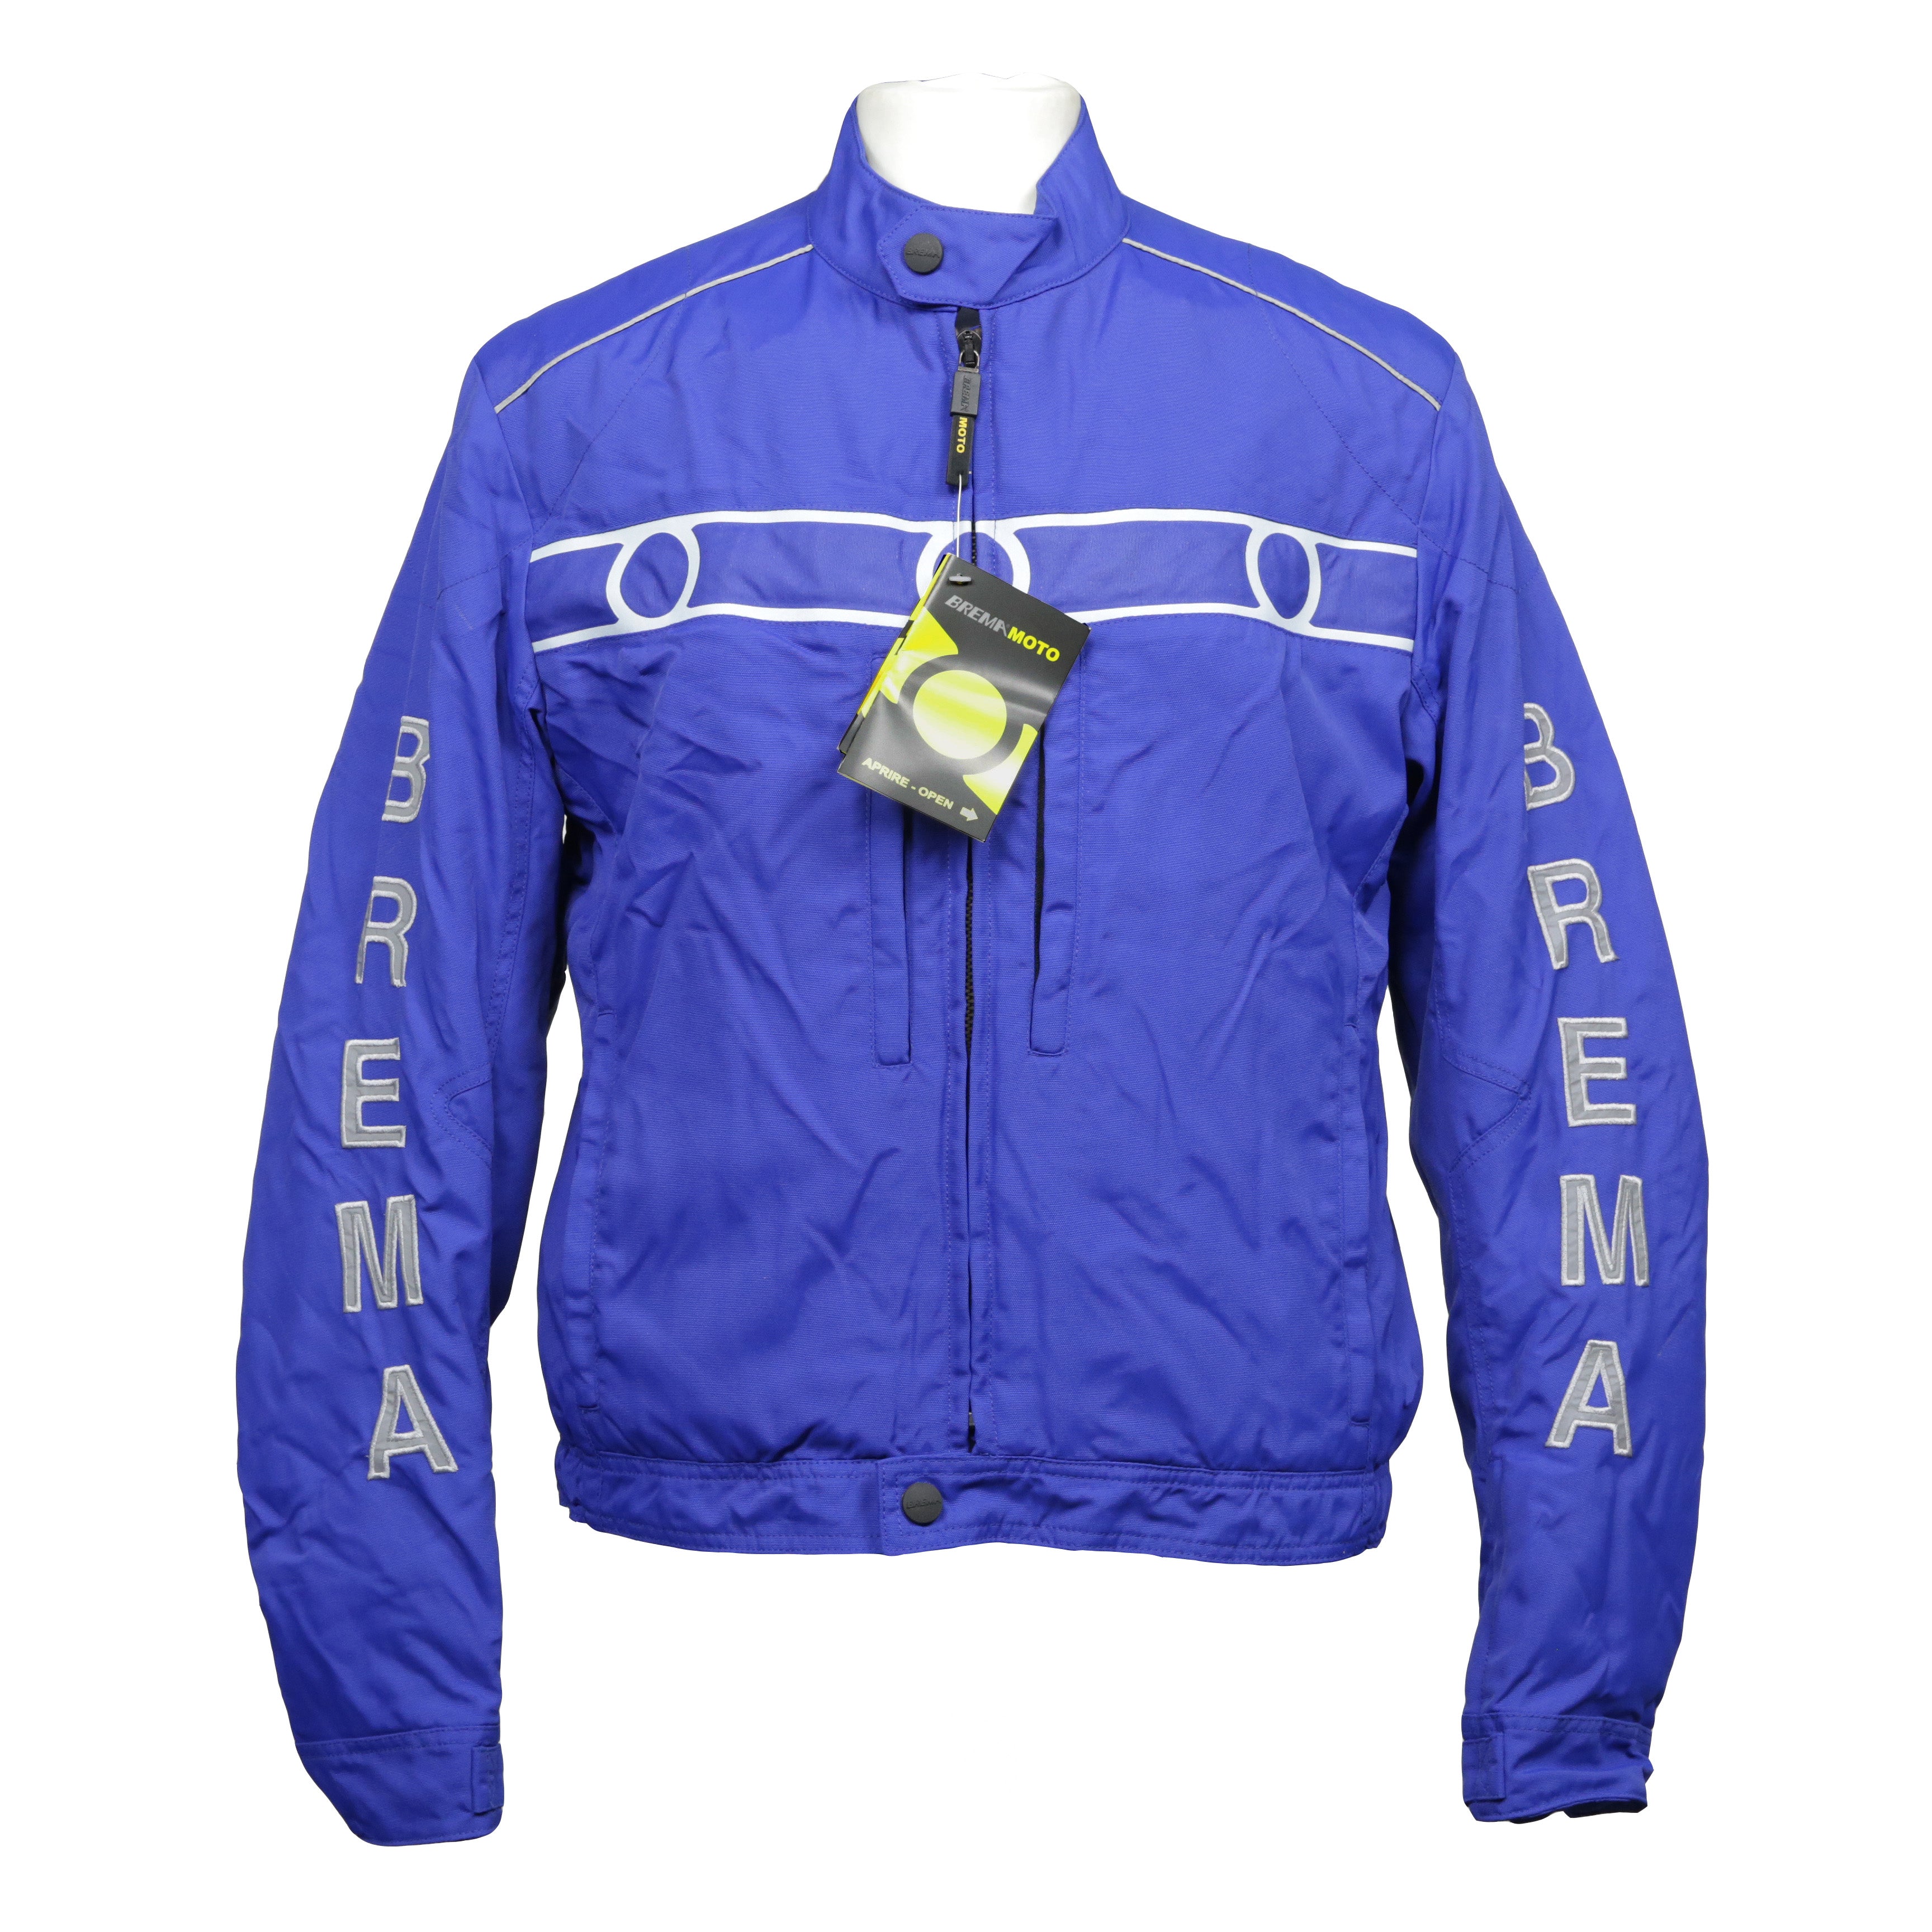 Brema Men's IDRO Motorcycle Touring Jacket - Blue